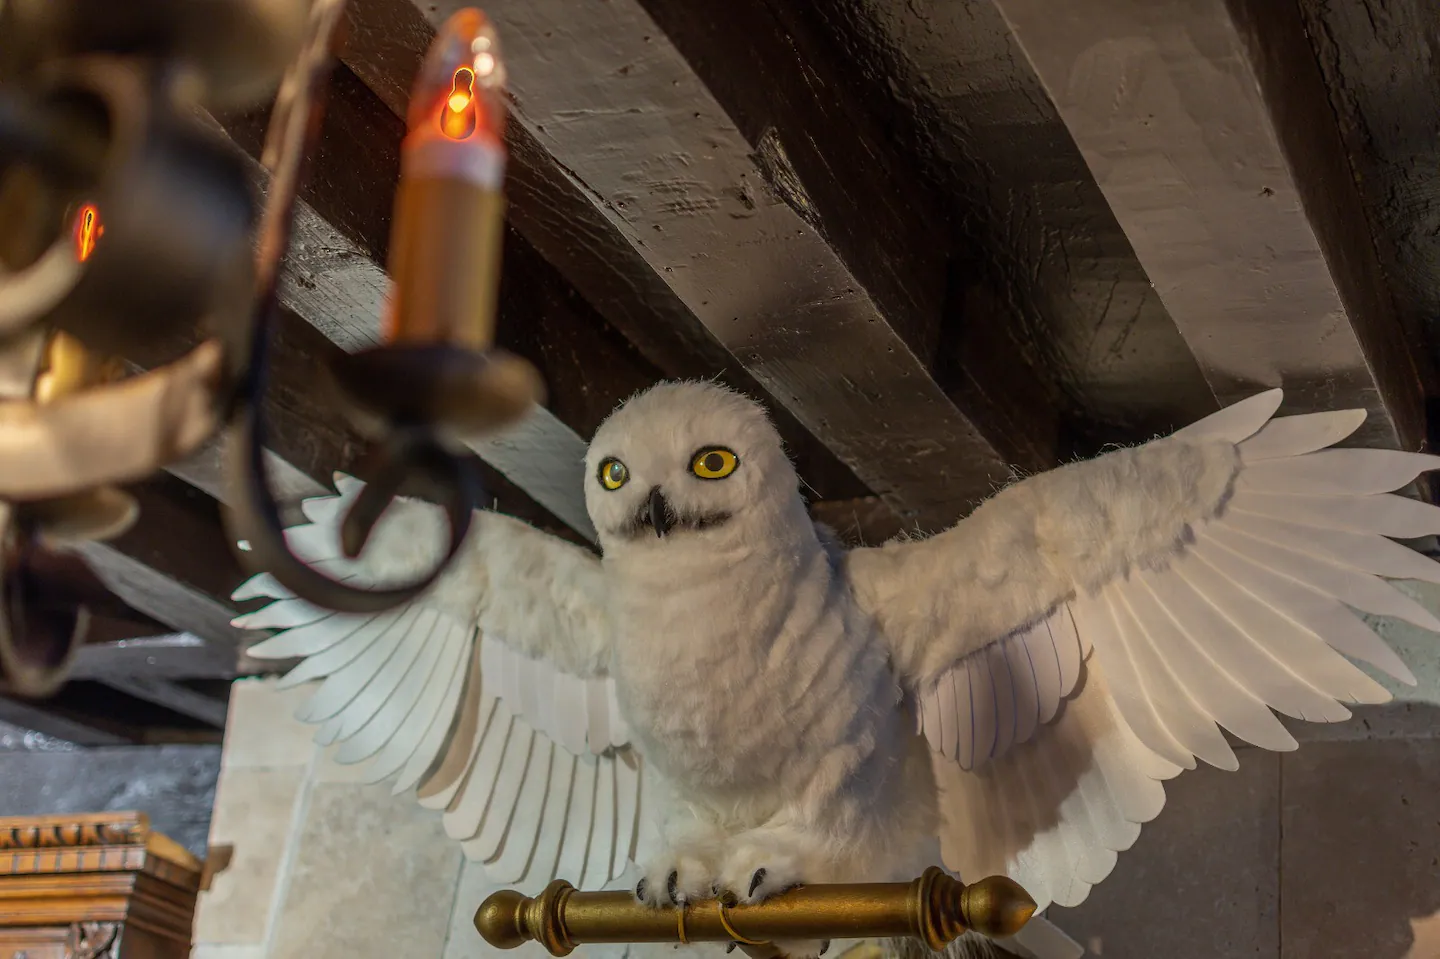 Hedwig watching over you!